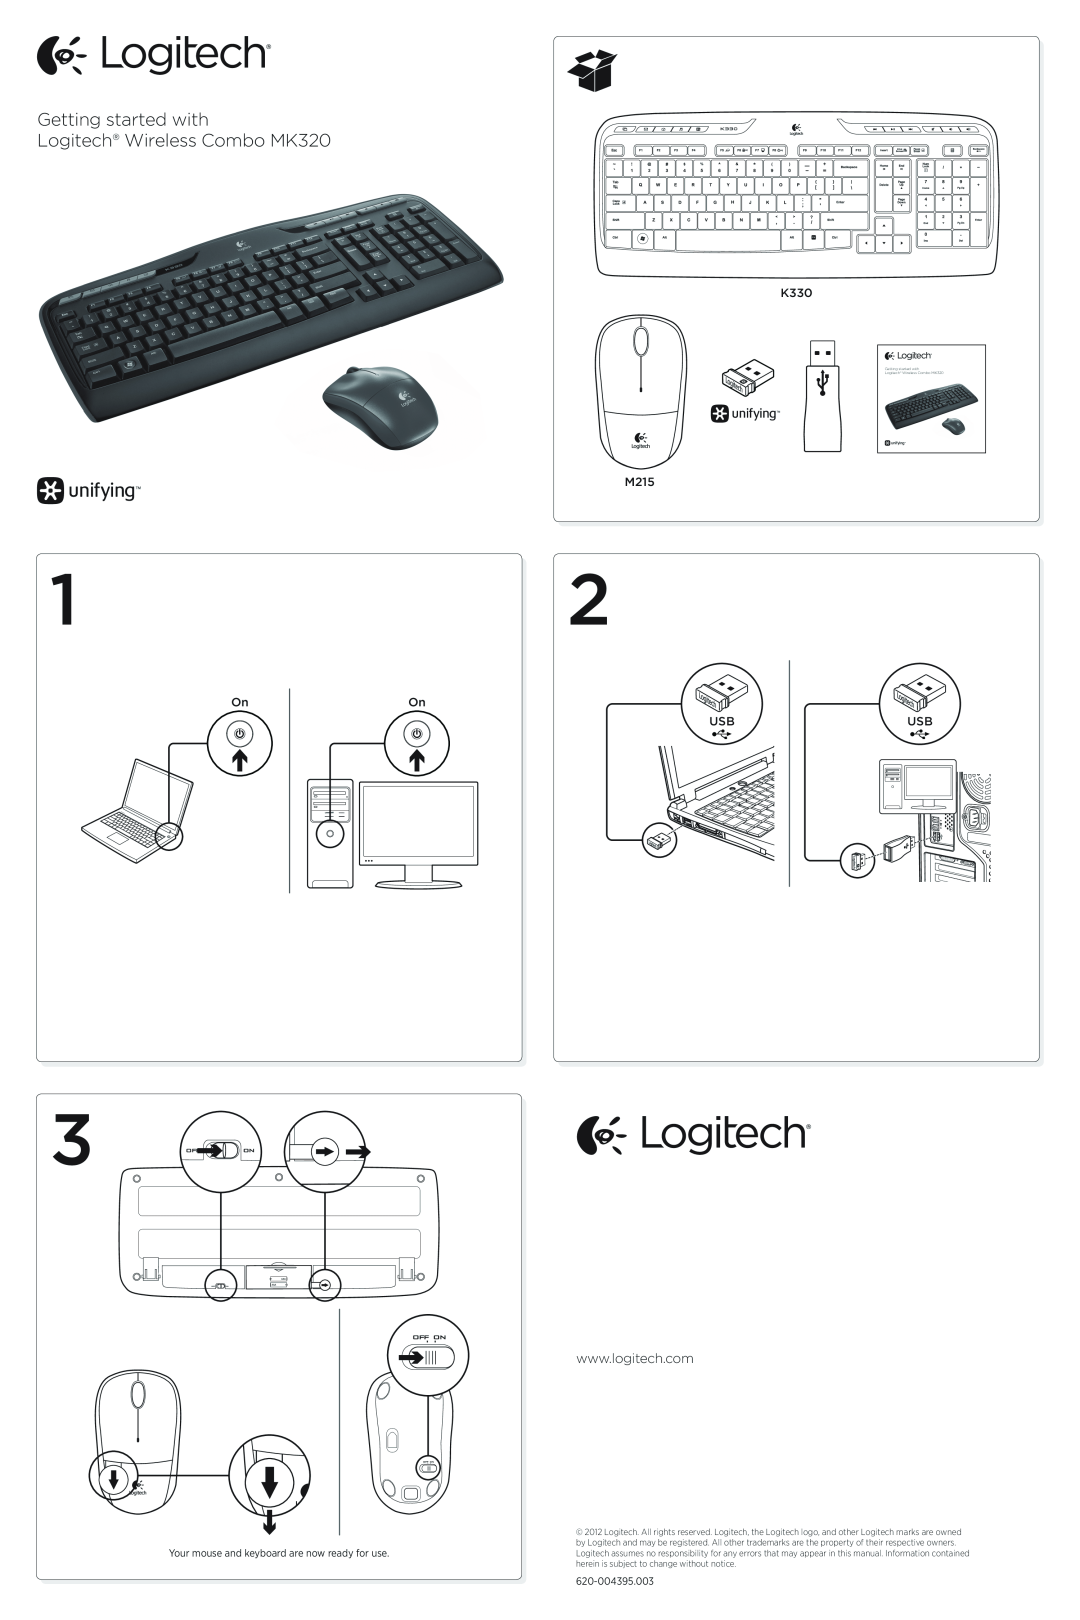 Logitech 920-002836 manual K330, M215, On USB, Getting started with Logitech Wireless Combo MK320 